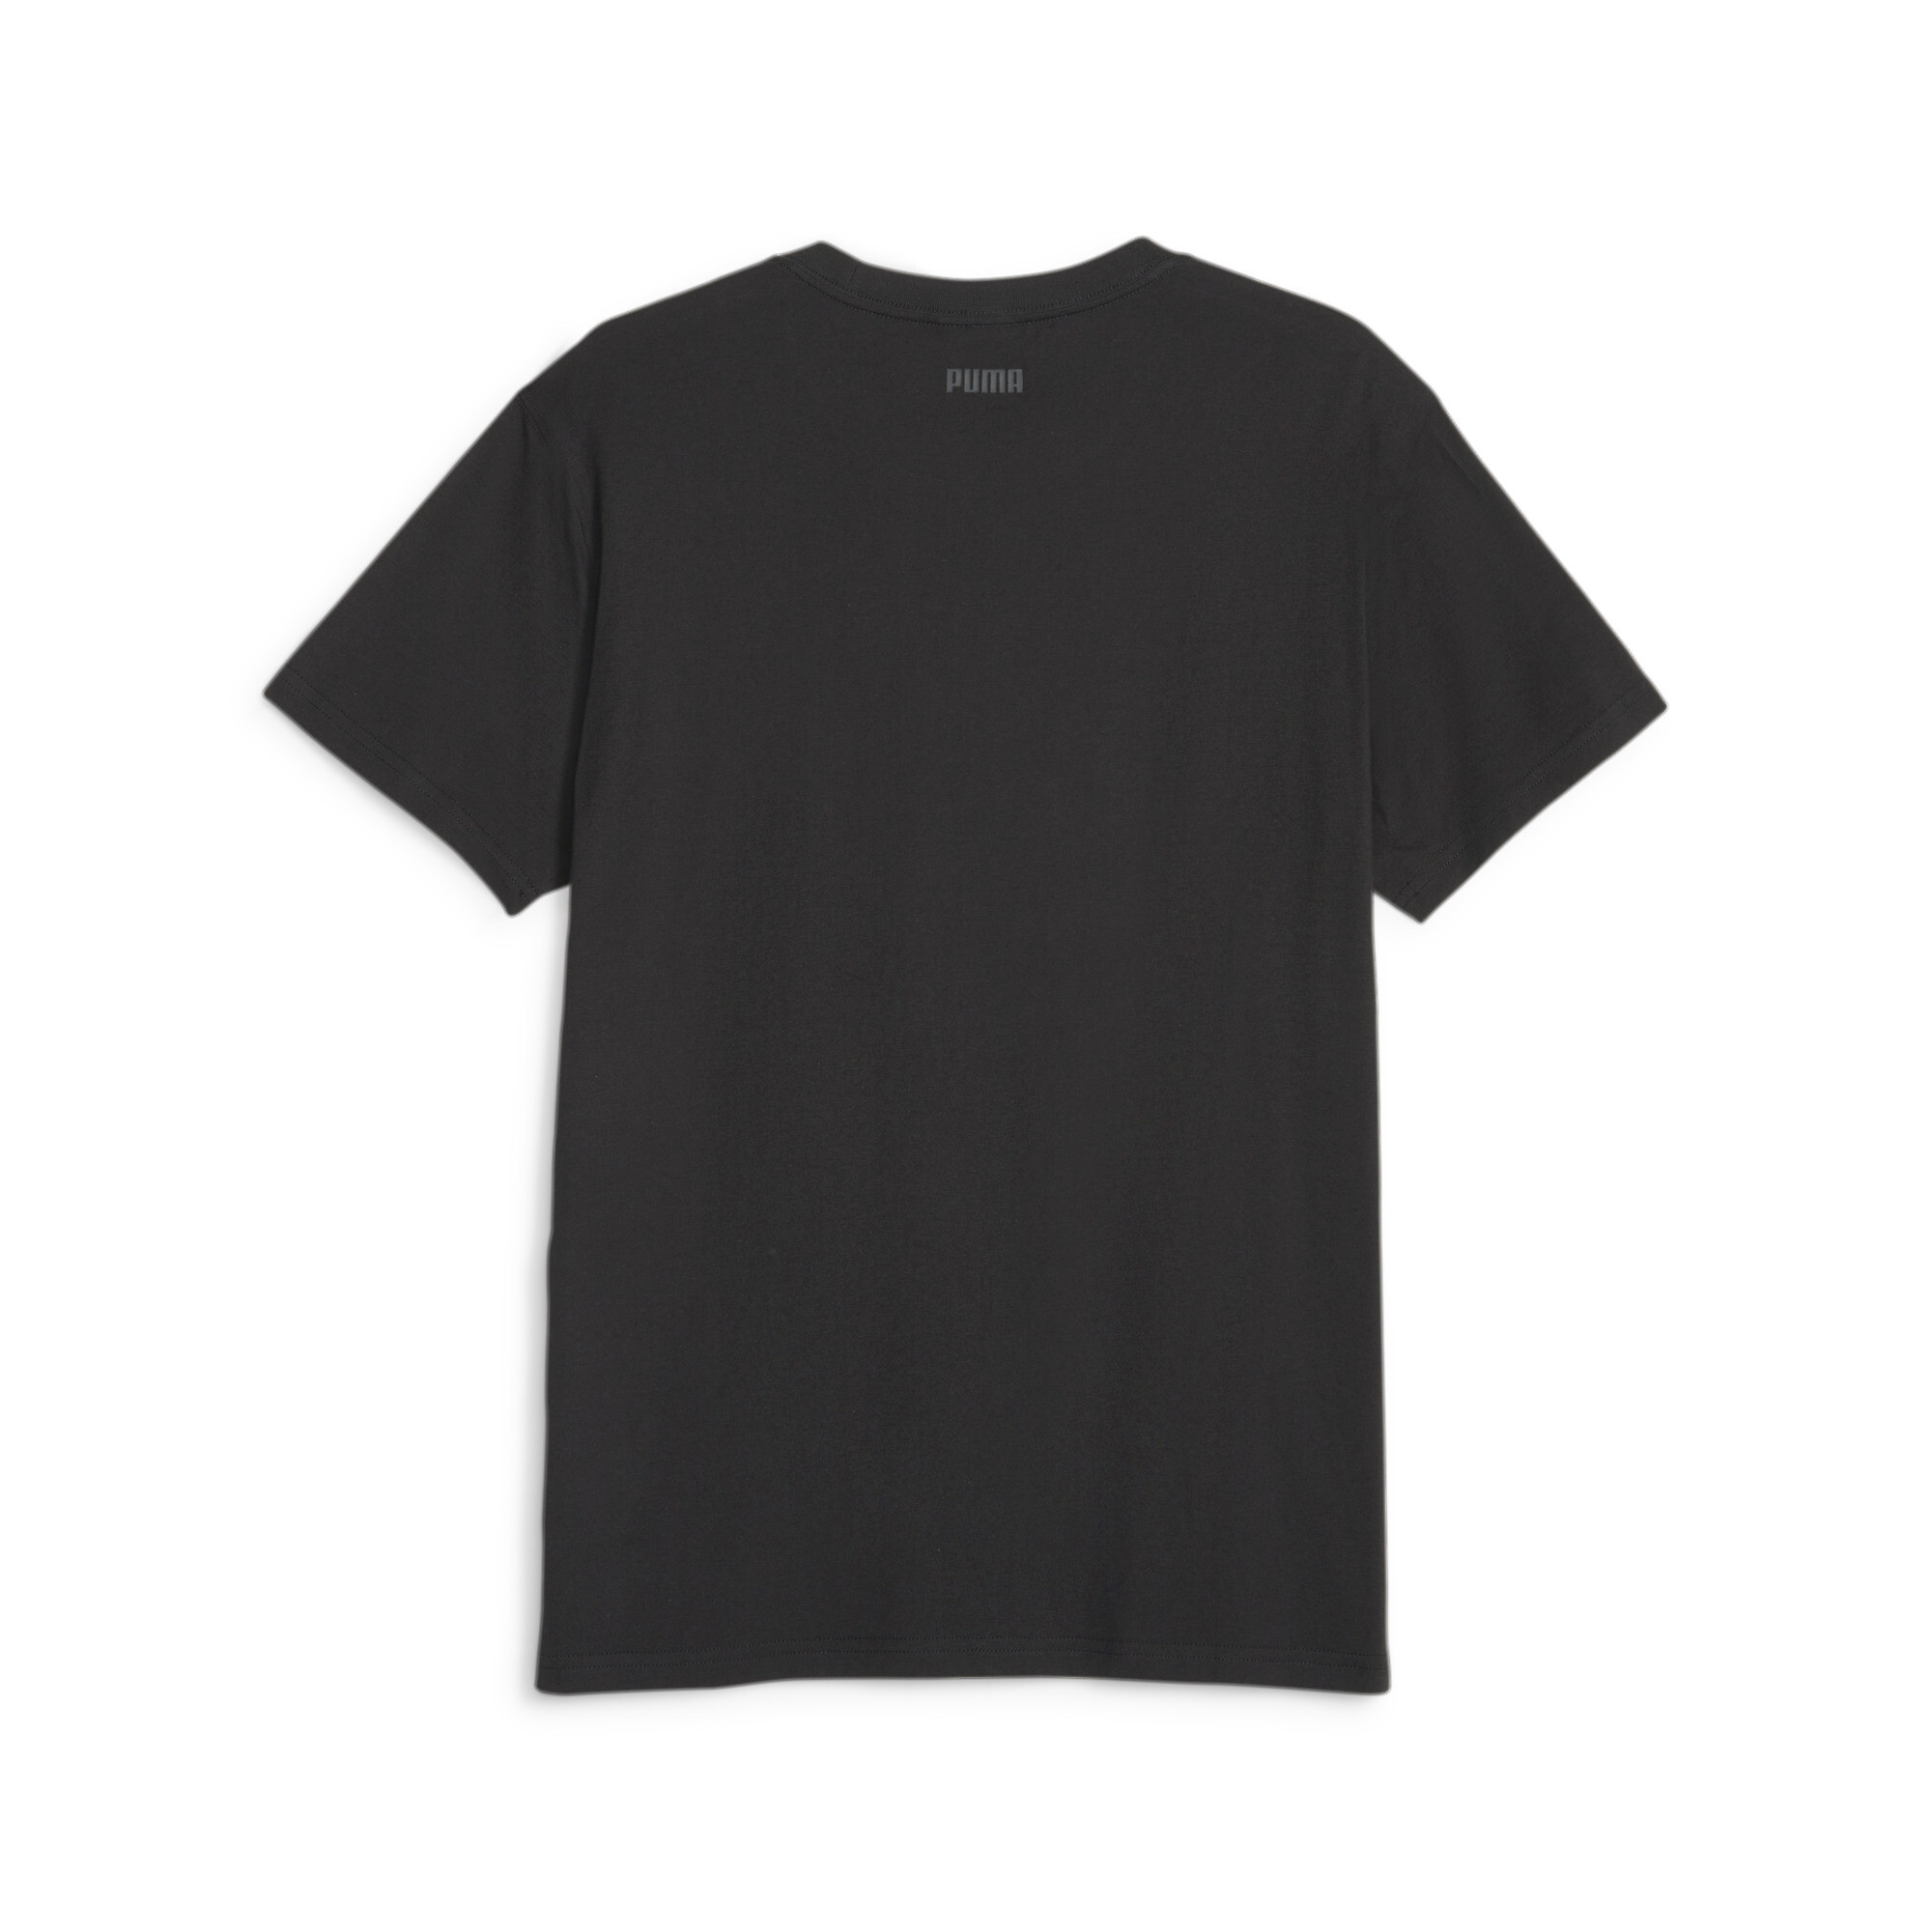 Men's Puma Franchise's Basketball Graphic T-Shirt, Black, Size XL, Clothing